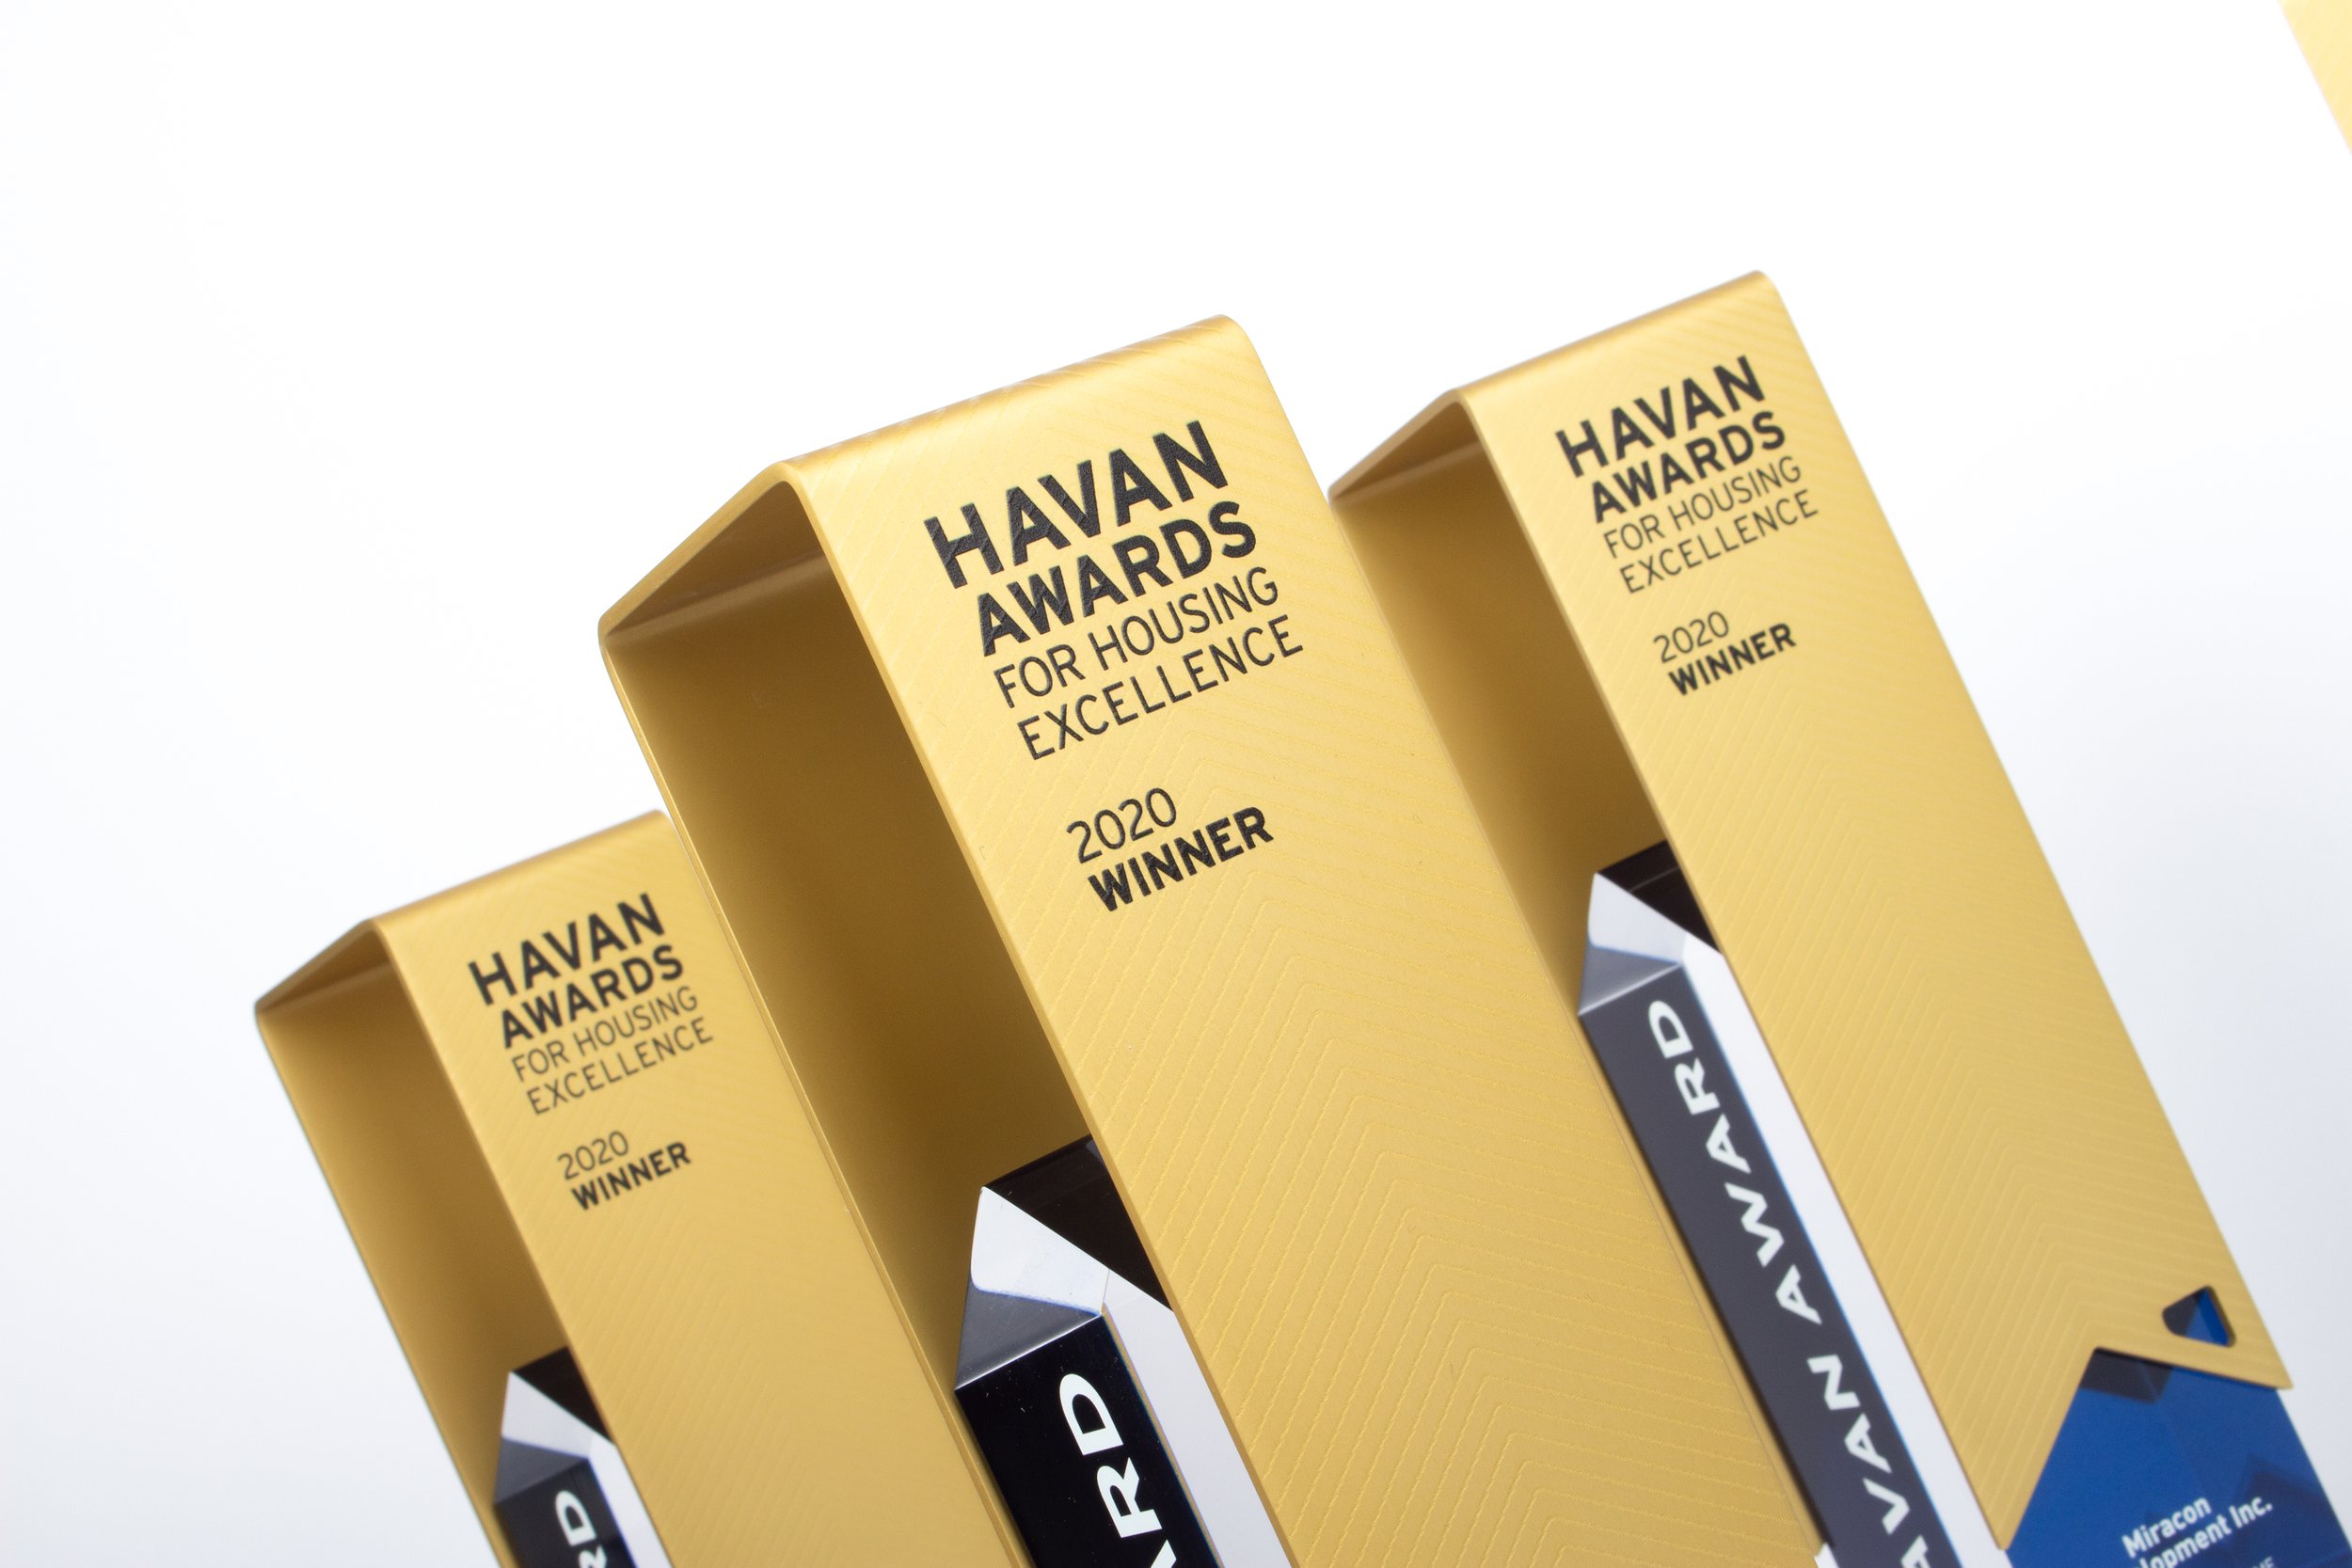 HAVAN awards housing excellence 